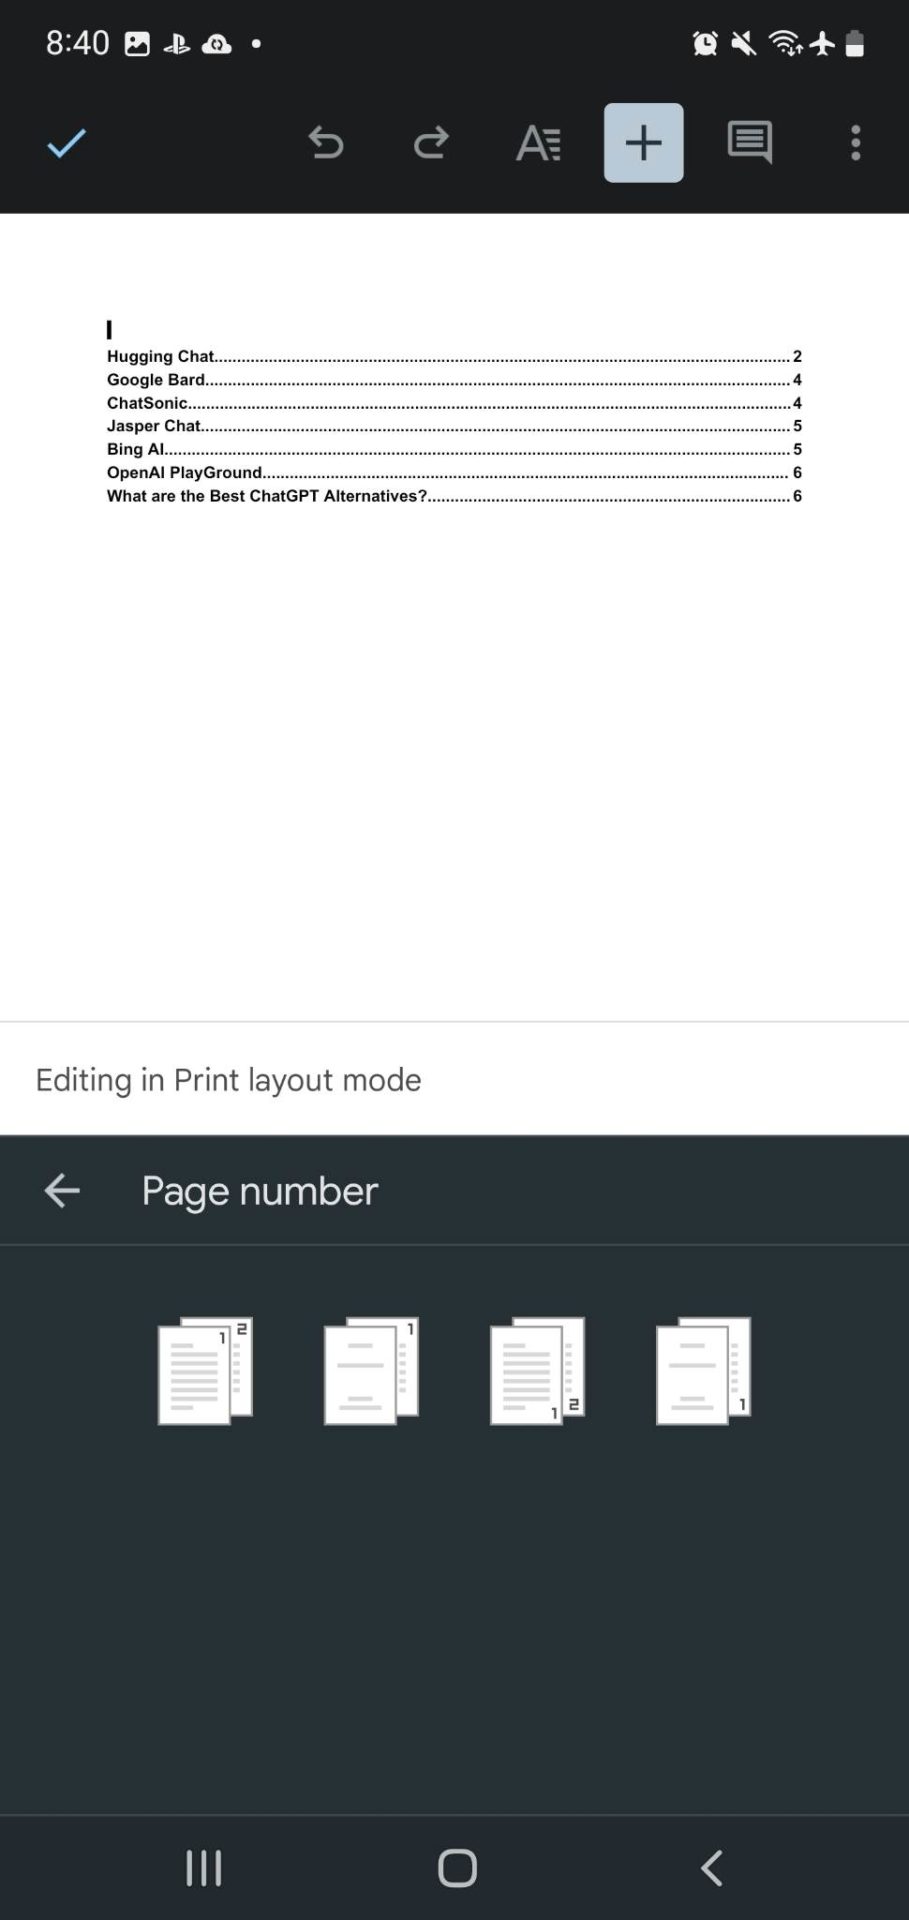 Adding page numbers to Google Docs via phone